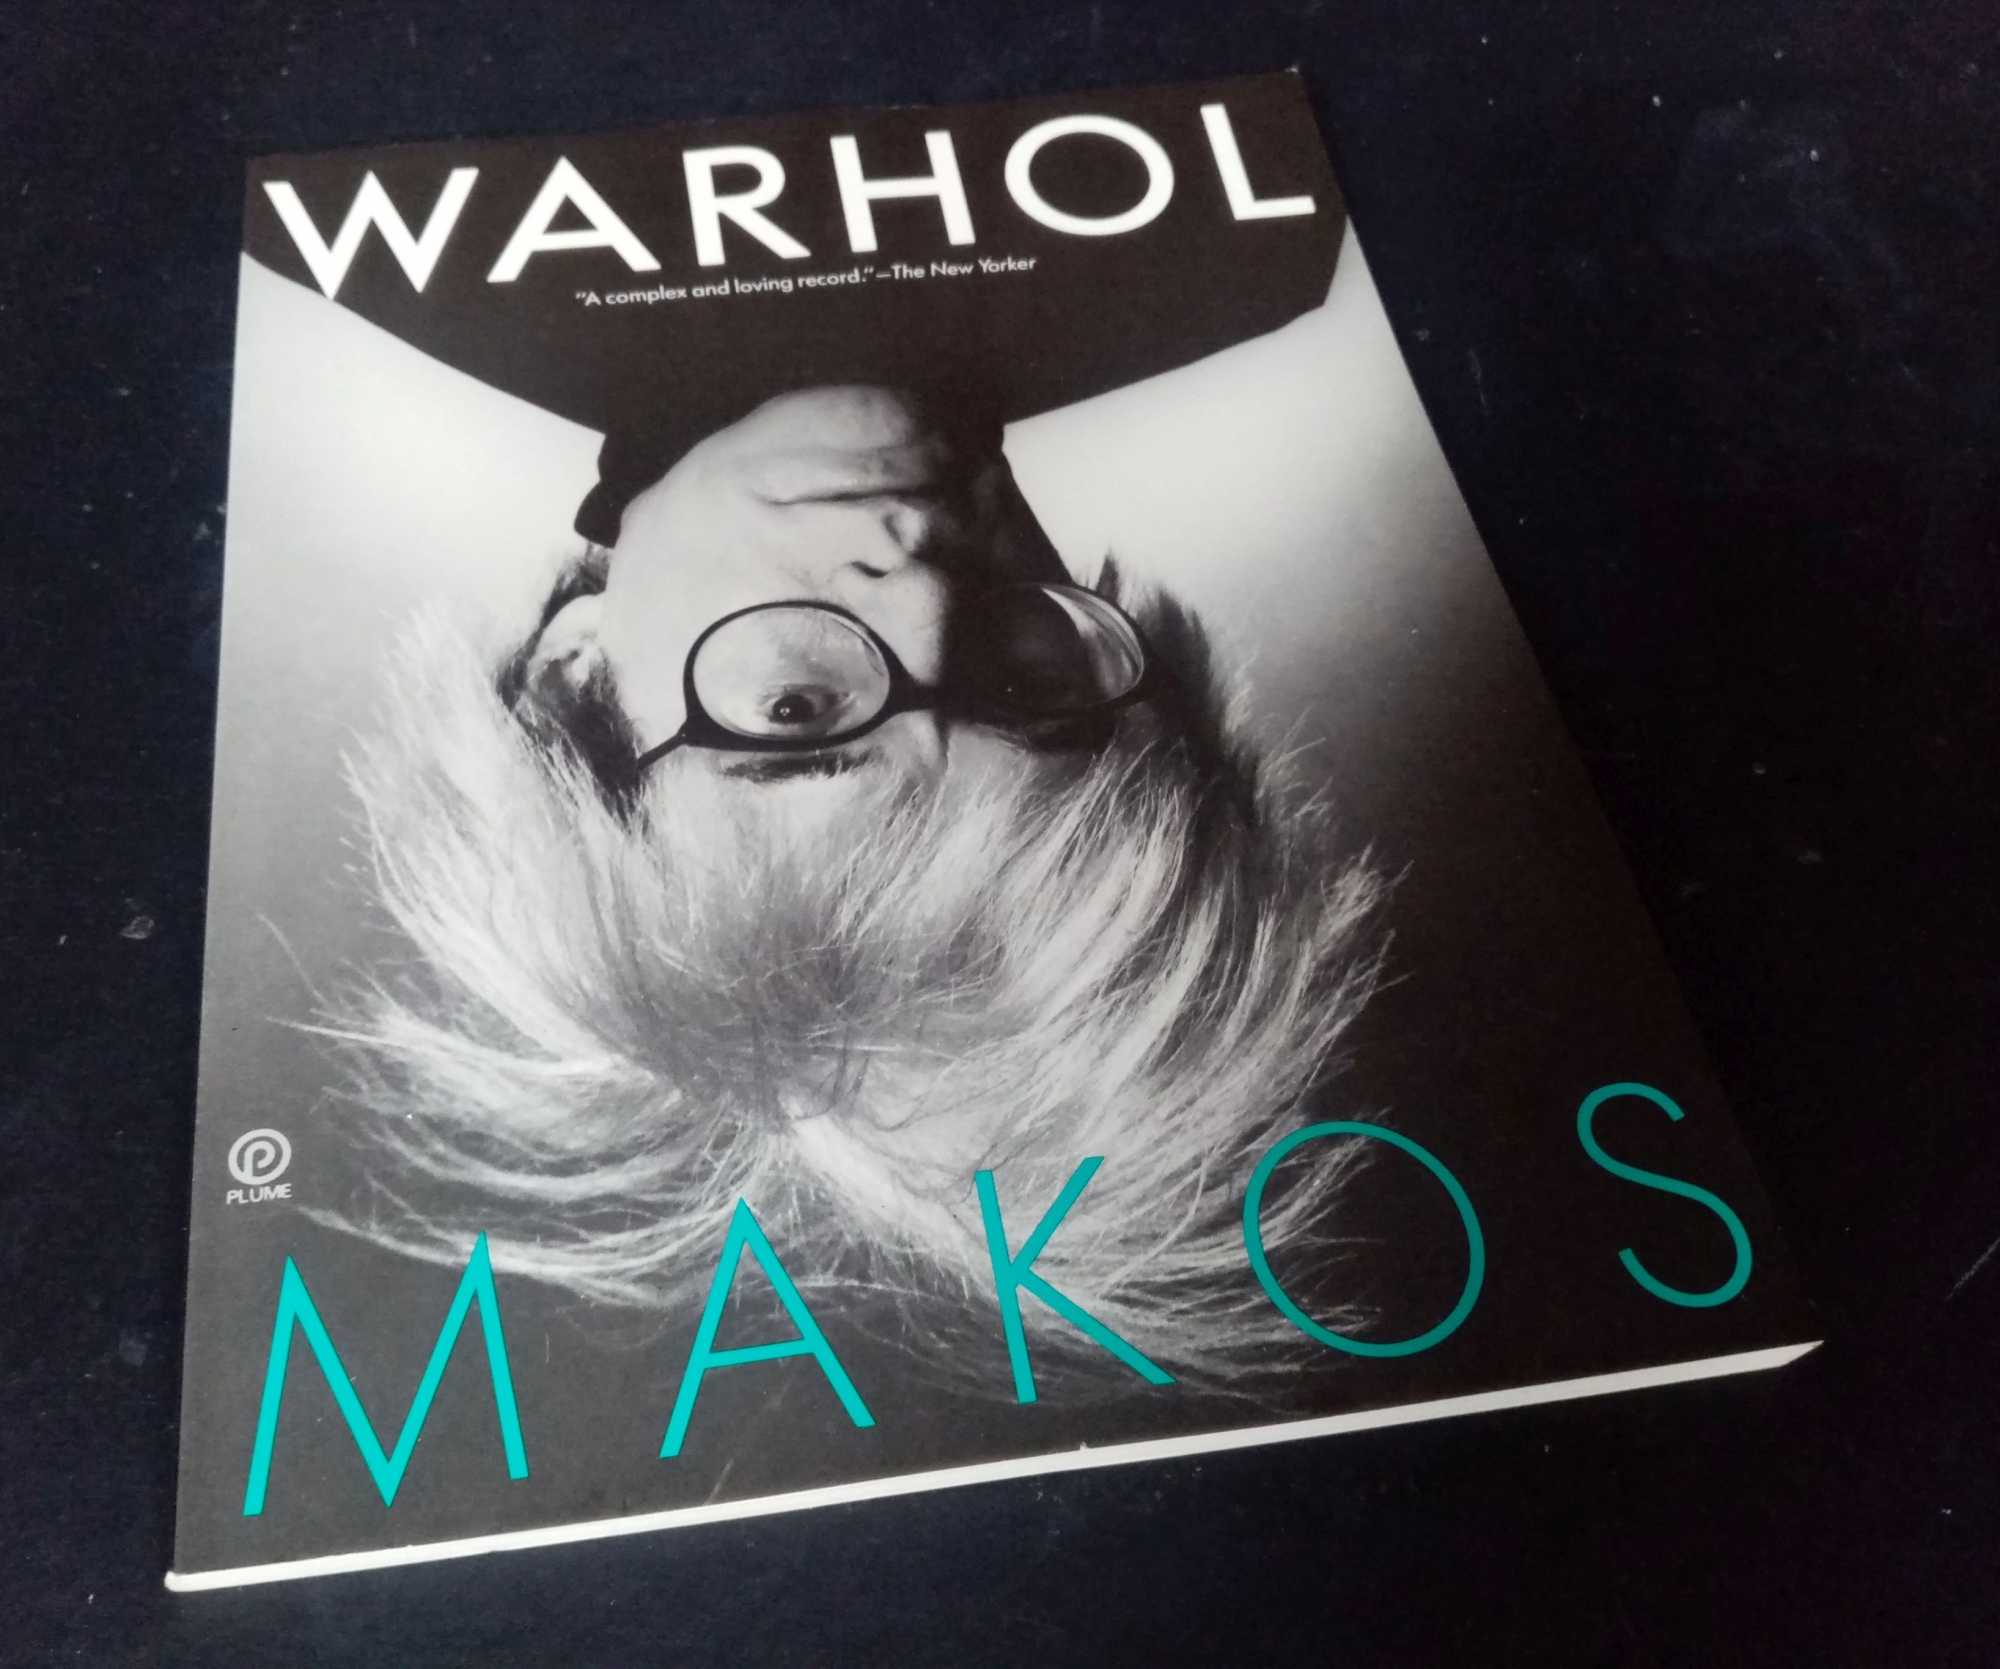 Christopher Makos - Warhol: A Personal Photographic Memoir